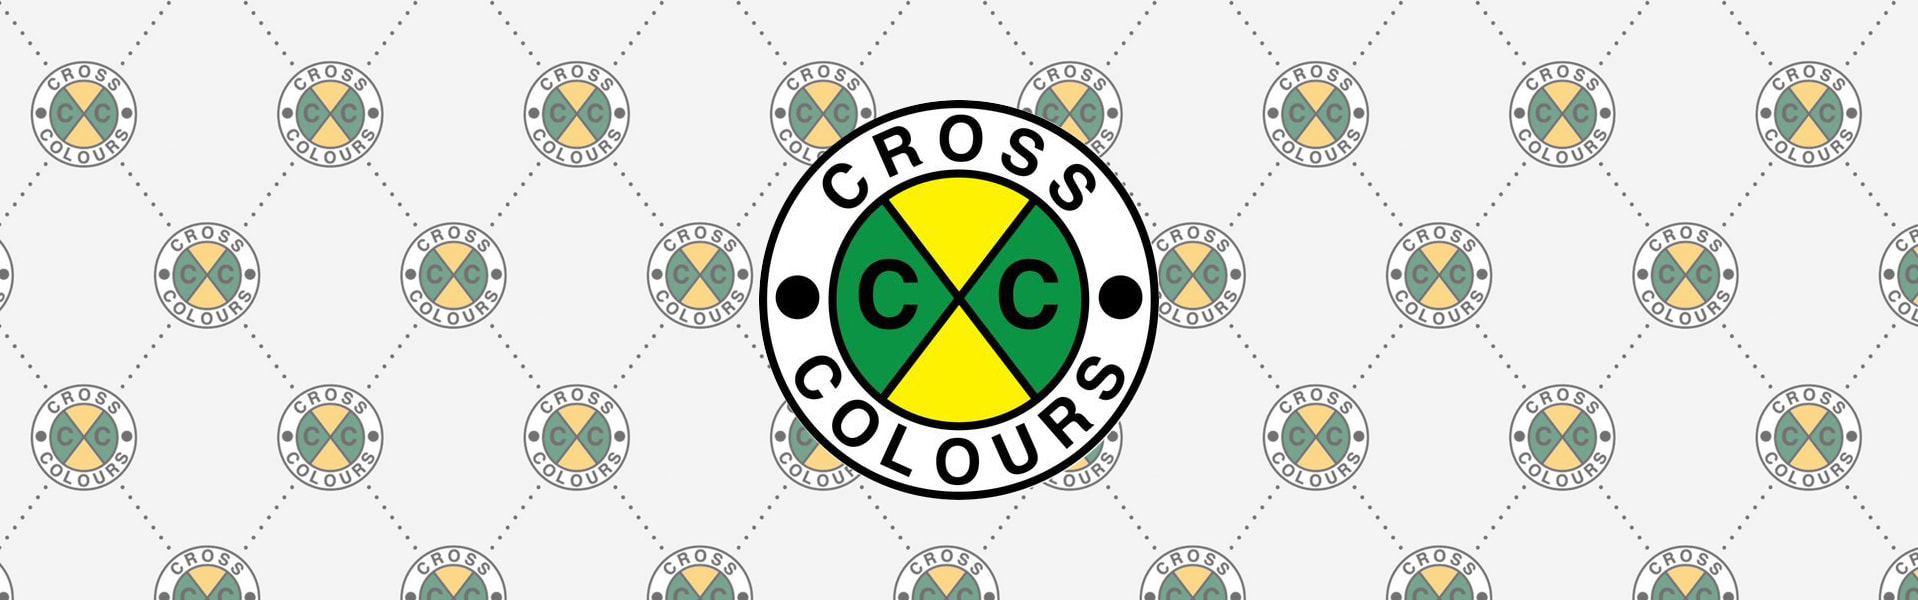 CROSS COLOURS ロゴ